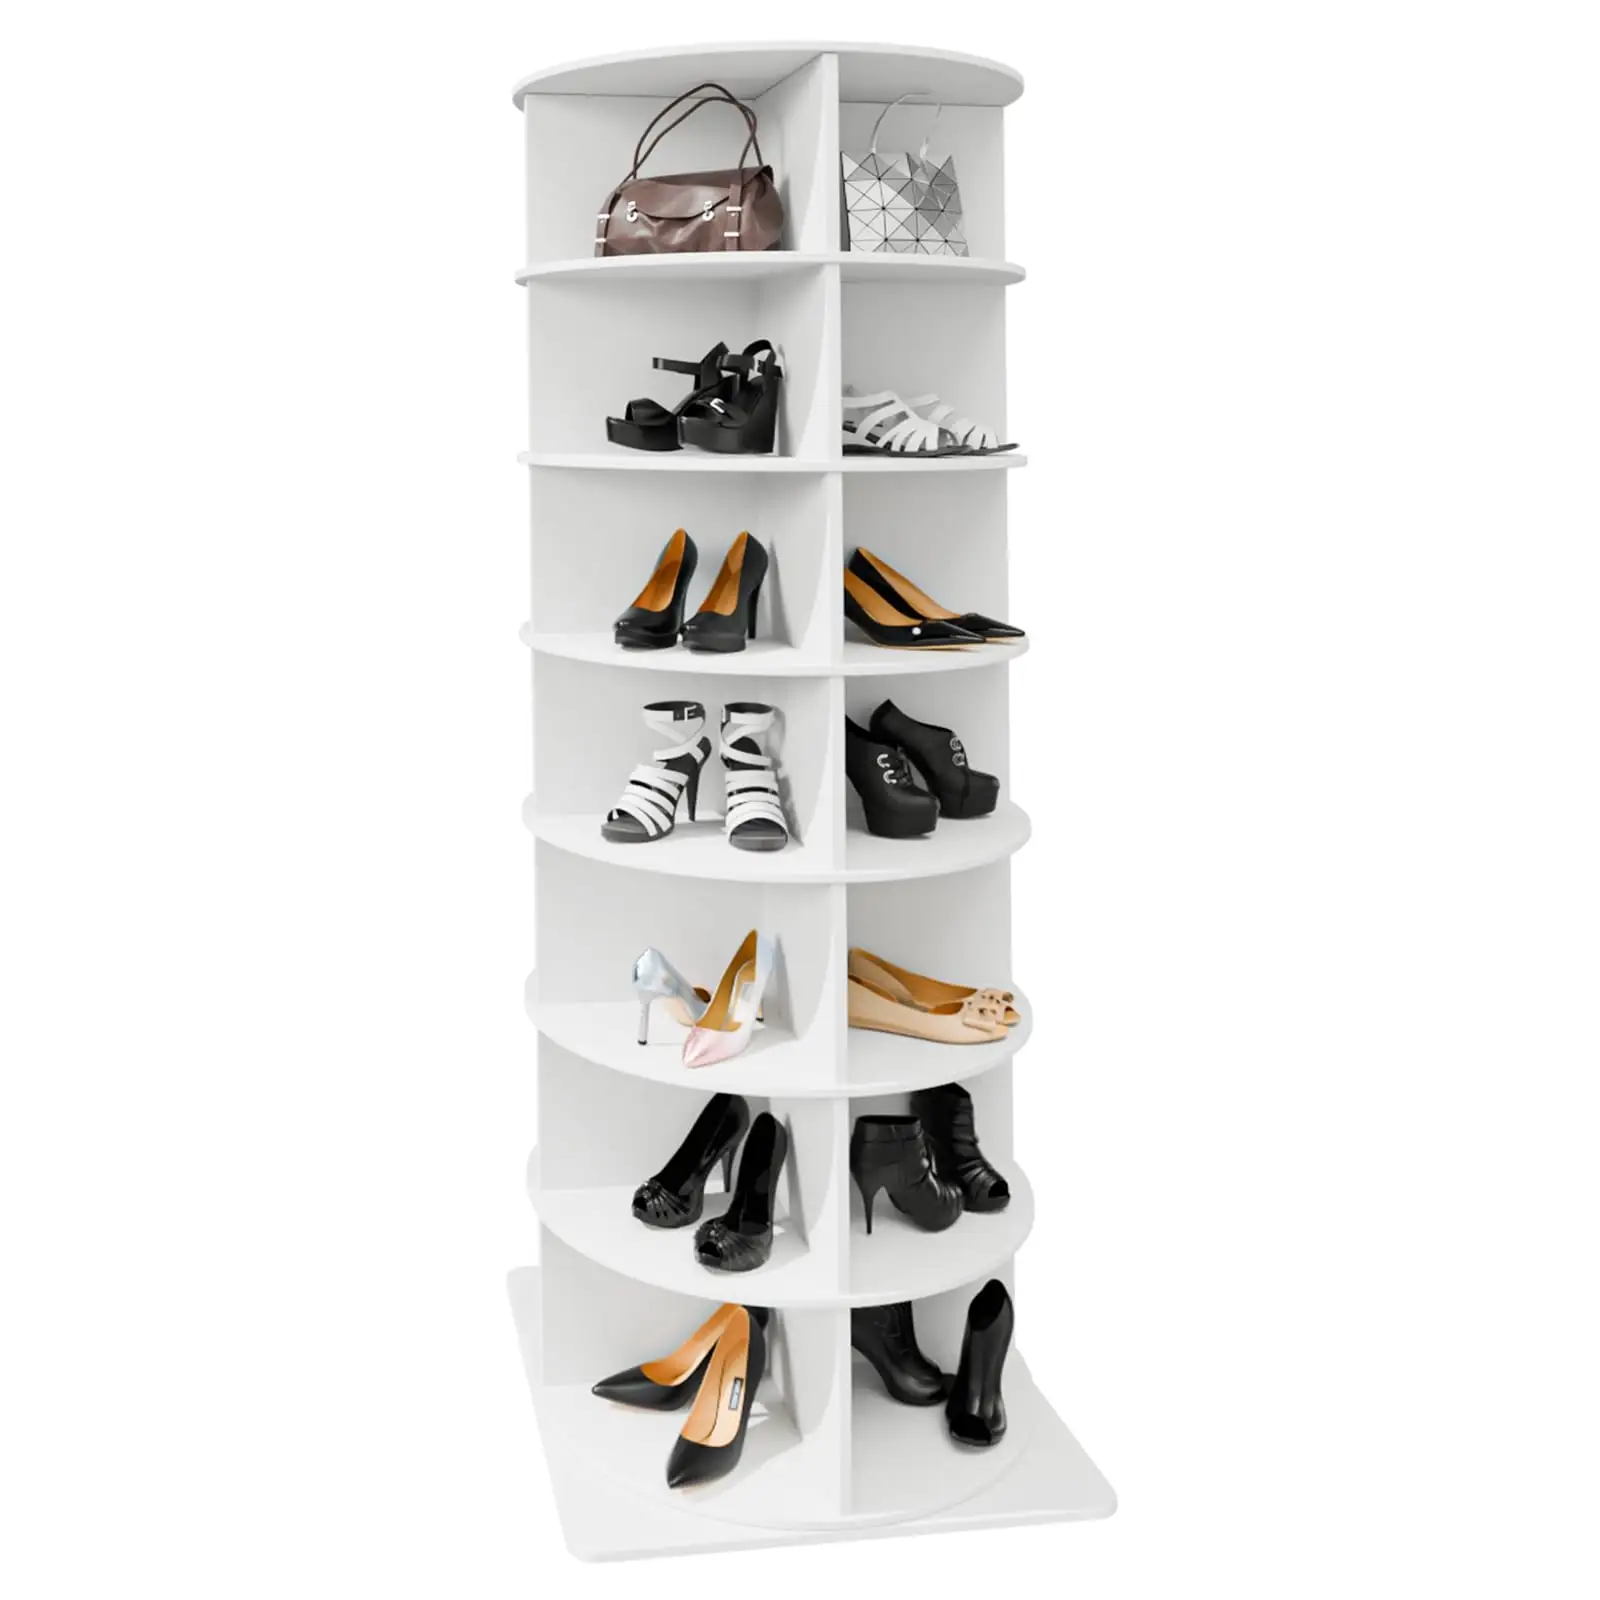 360-degree rotation 7 floors high Large 360 rotating shoe rack radius Living room furniture PVC Material Shoe Racks